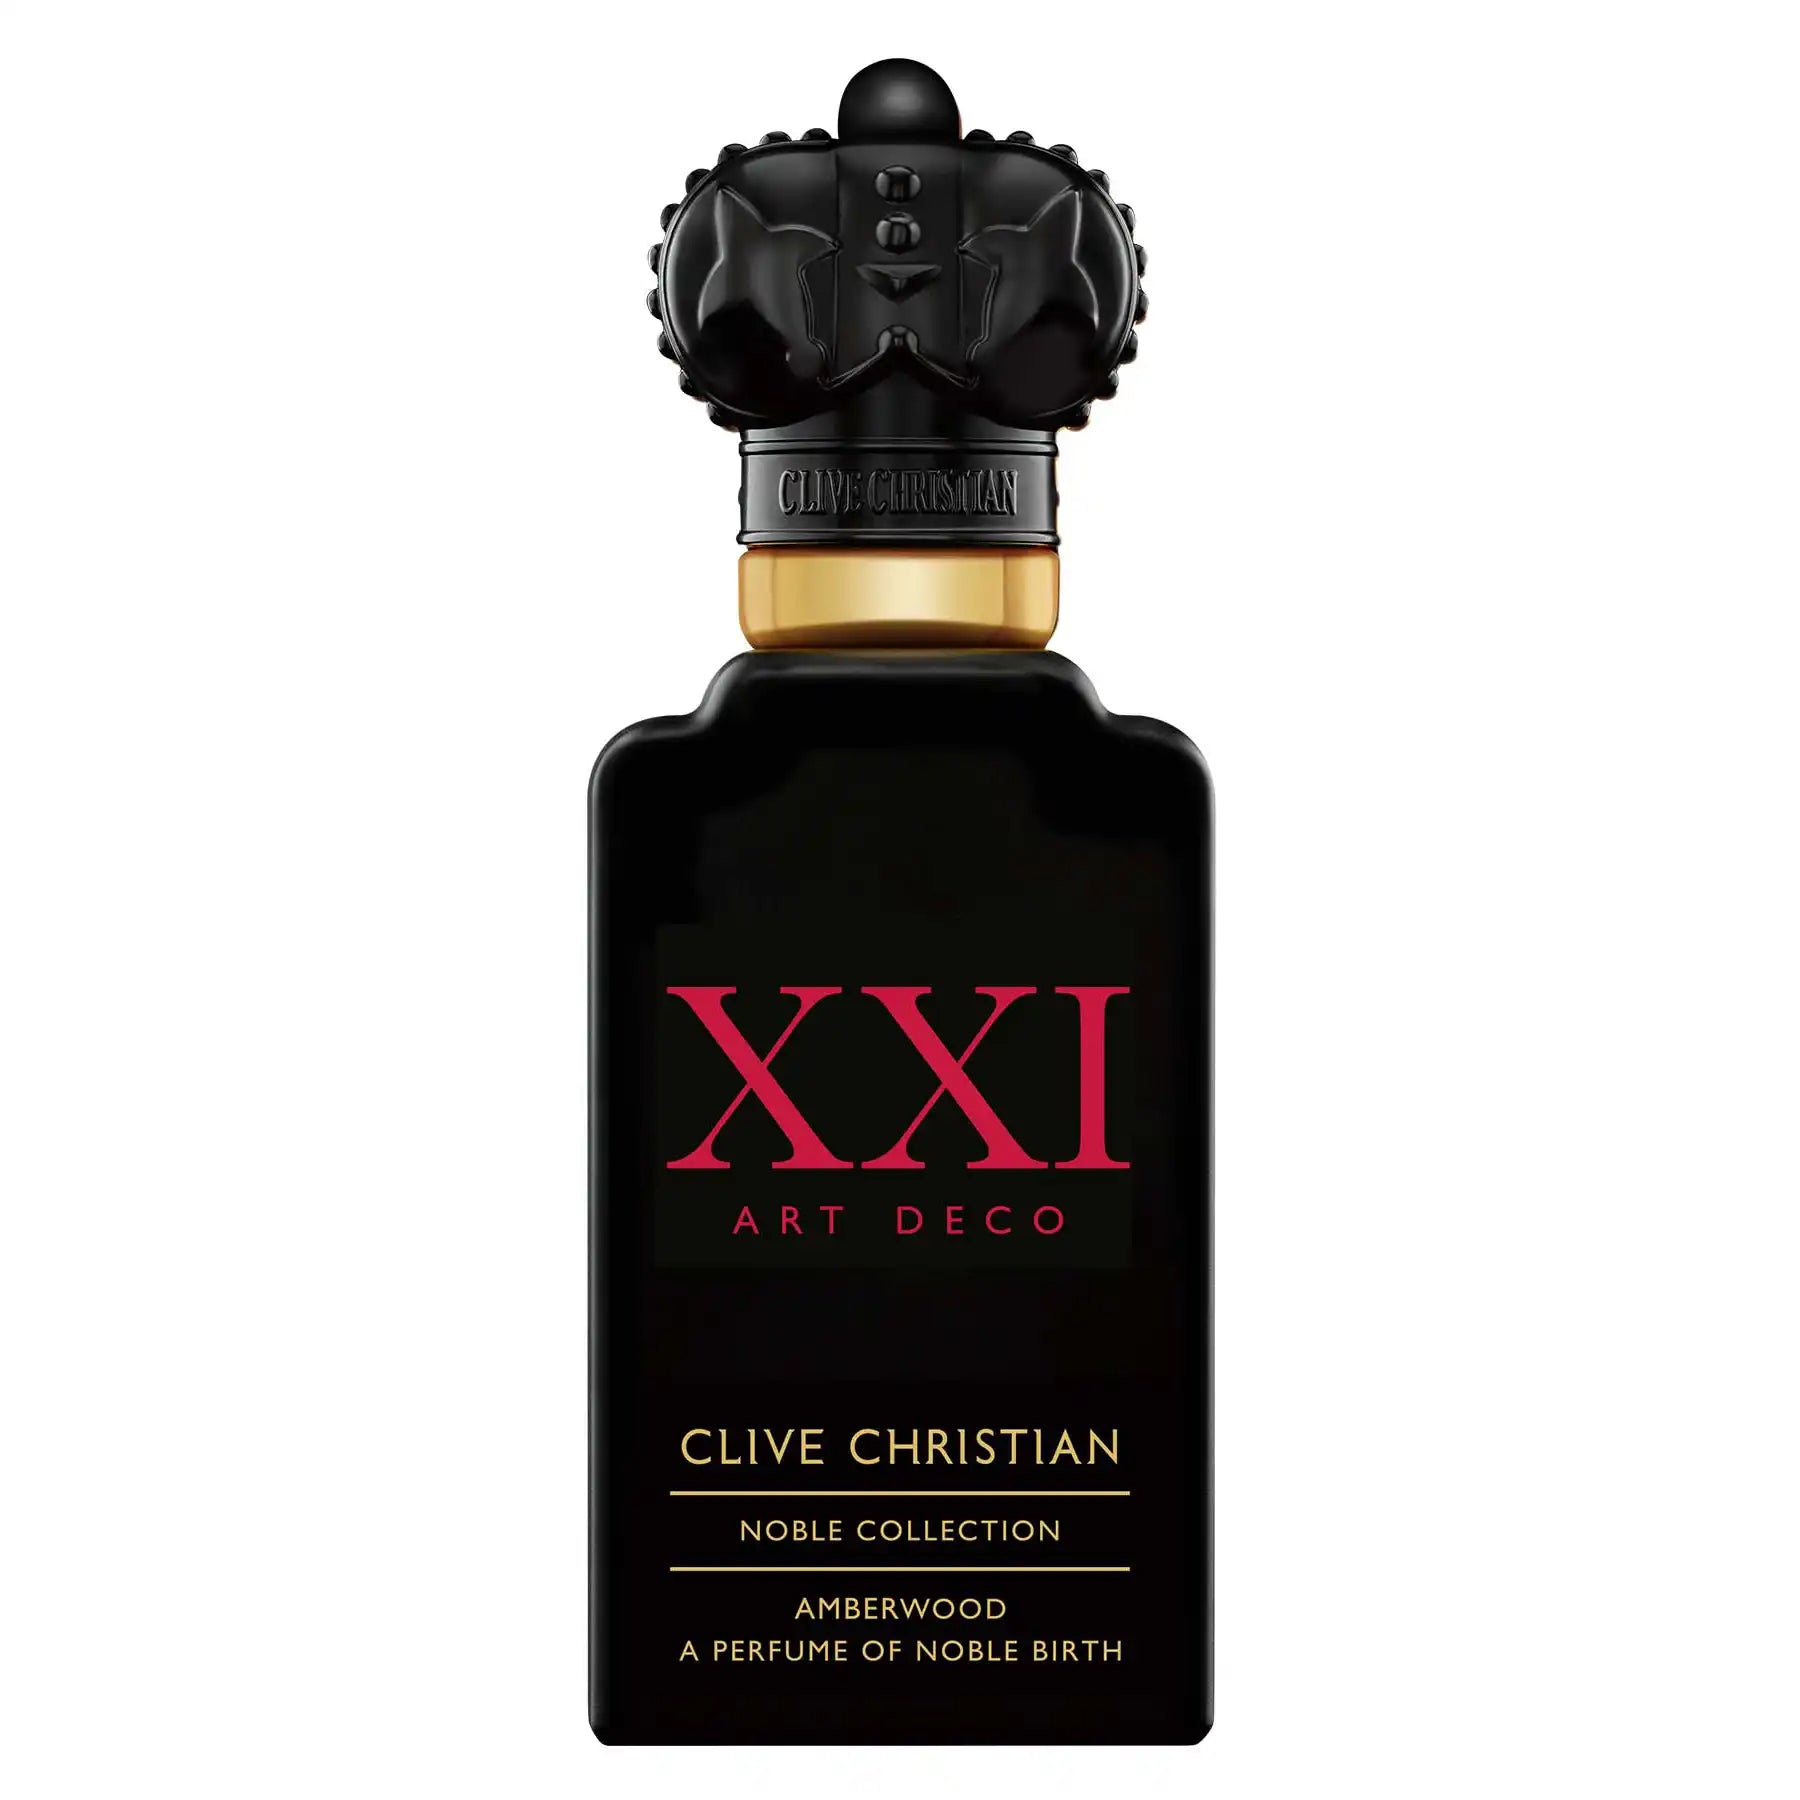 Clive Christian Art Deco Amberwood Eau de Parfum 50ml